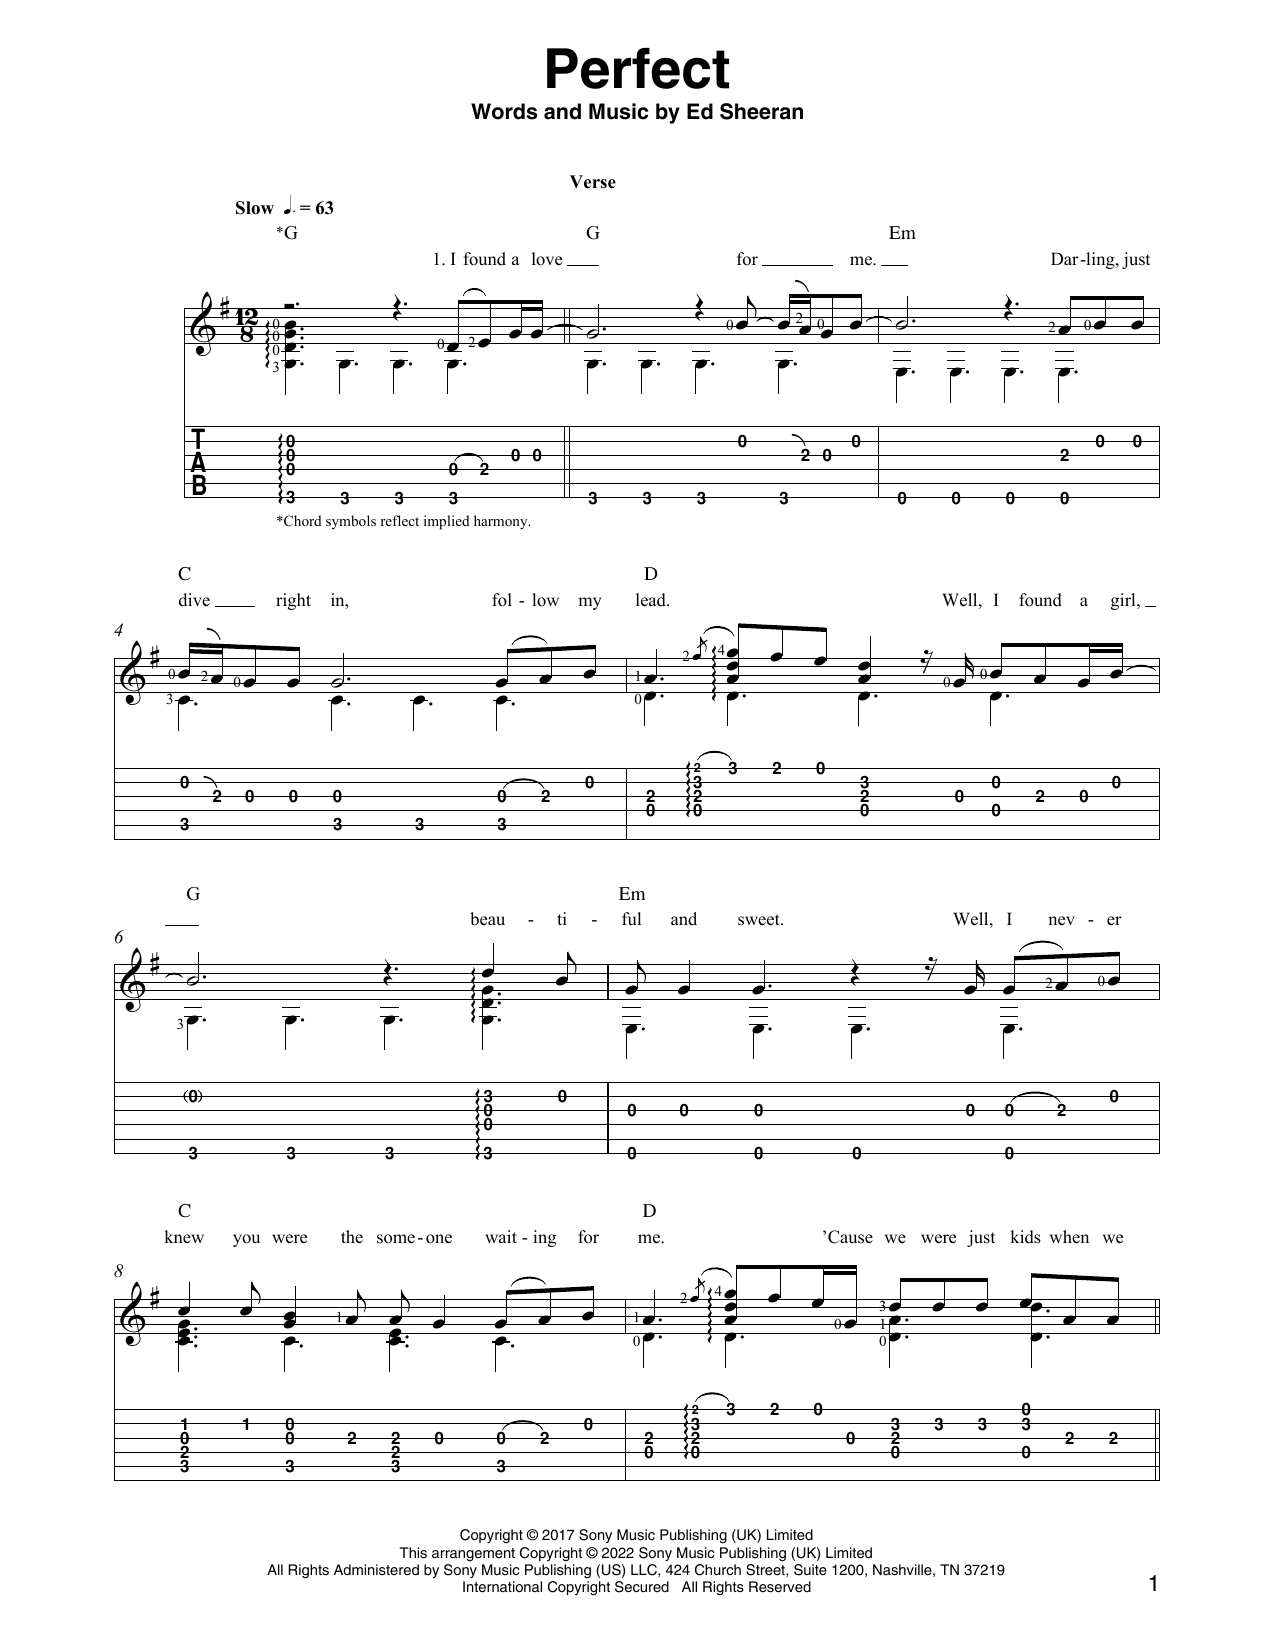 Ed Sheeran Perfect (arr. Ben Pila) Sheet Music Notes & Chords for Solo Guitar - Download or Print PDF